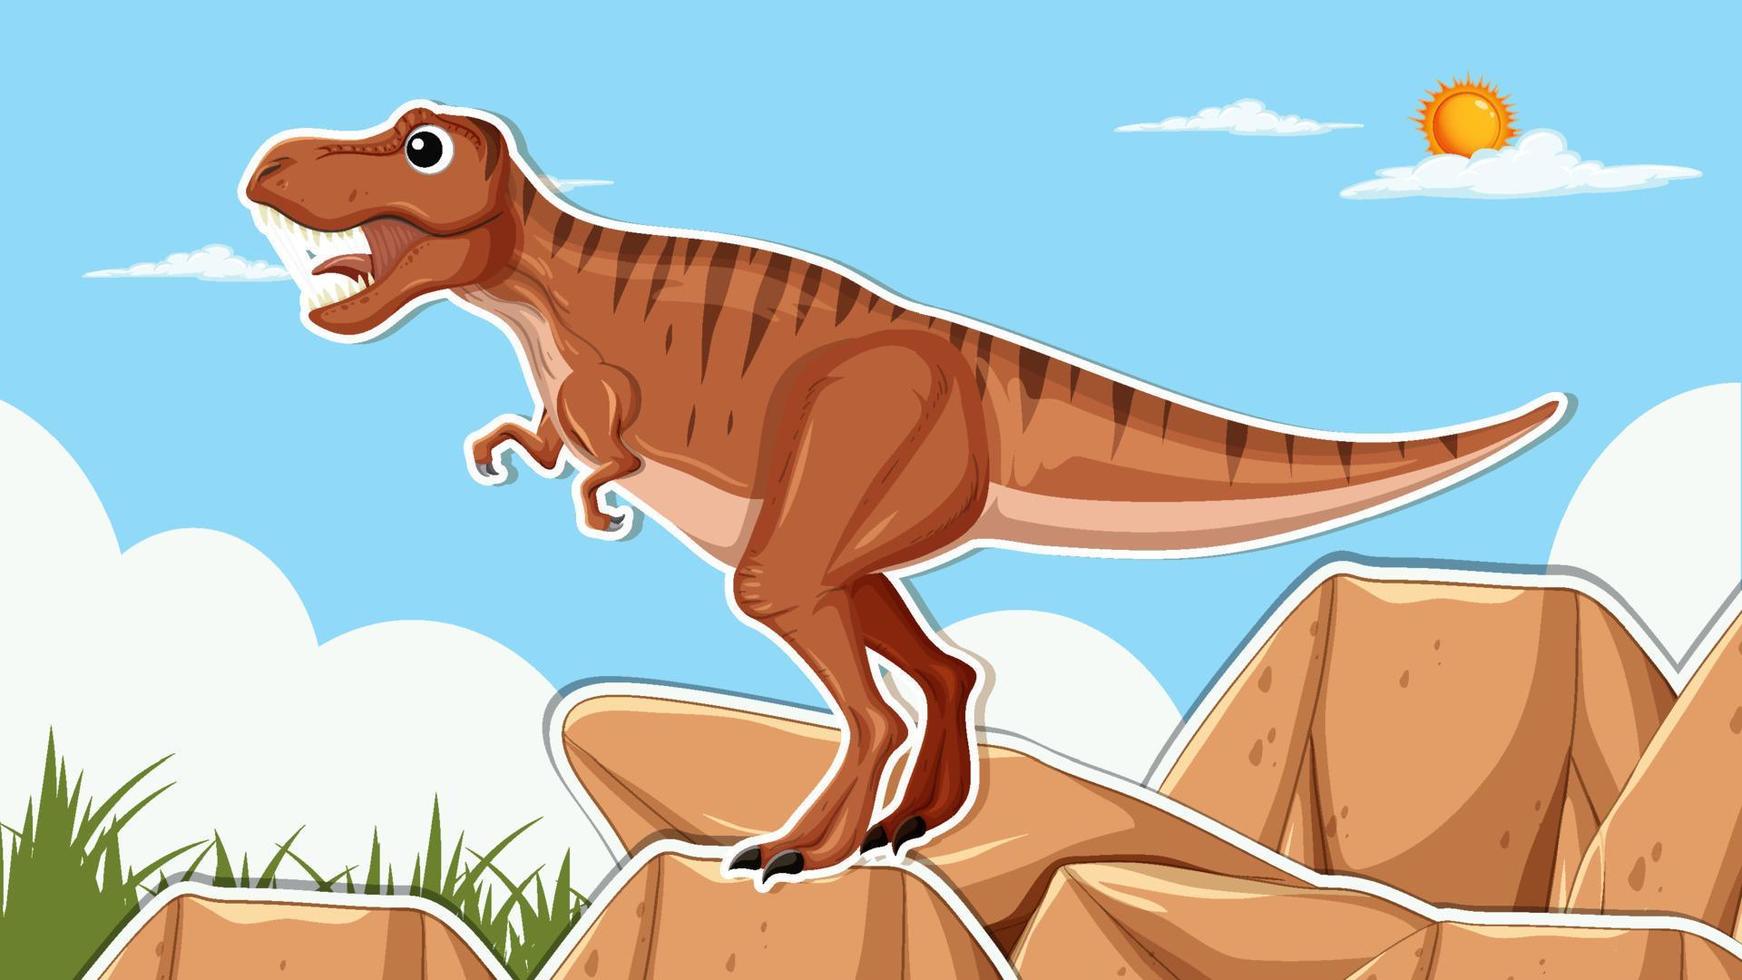 Thumbnail design with dinosaur raptor vector